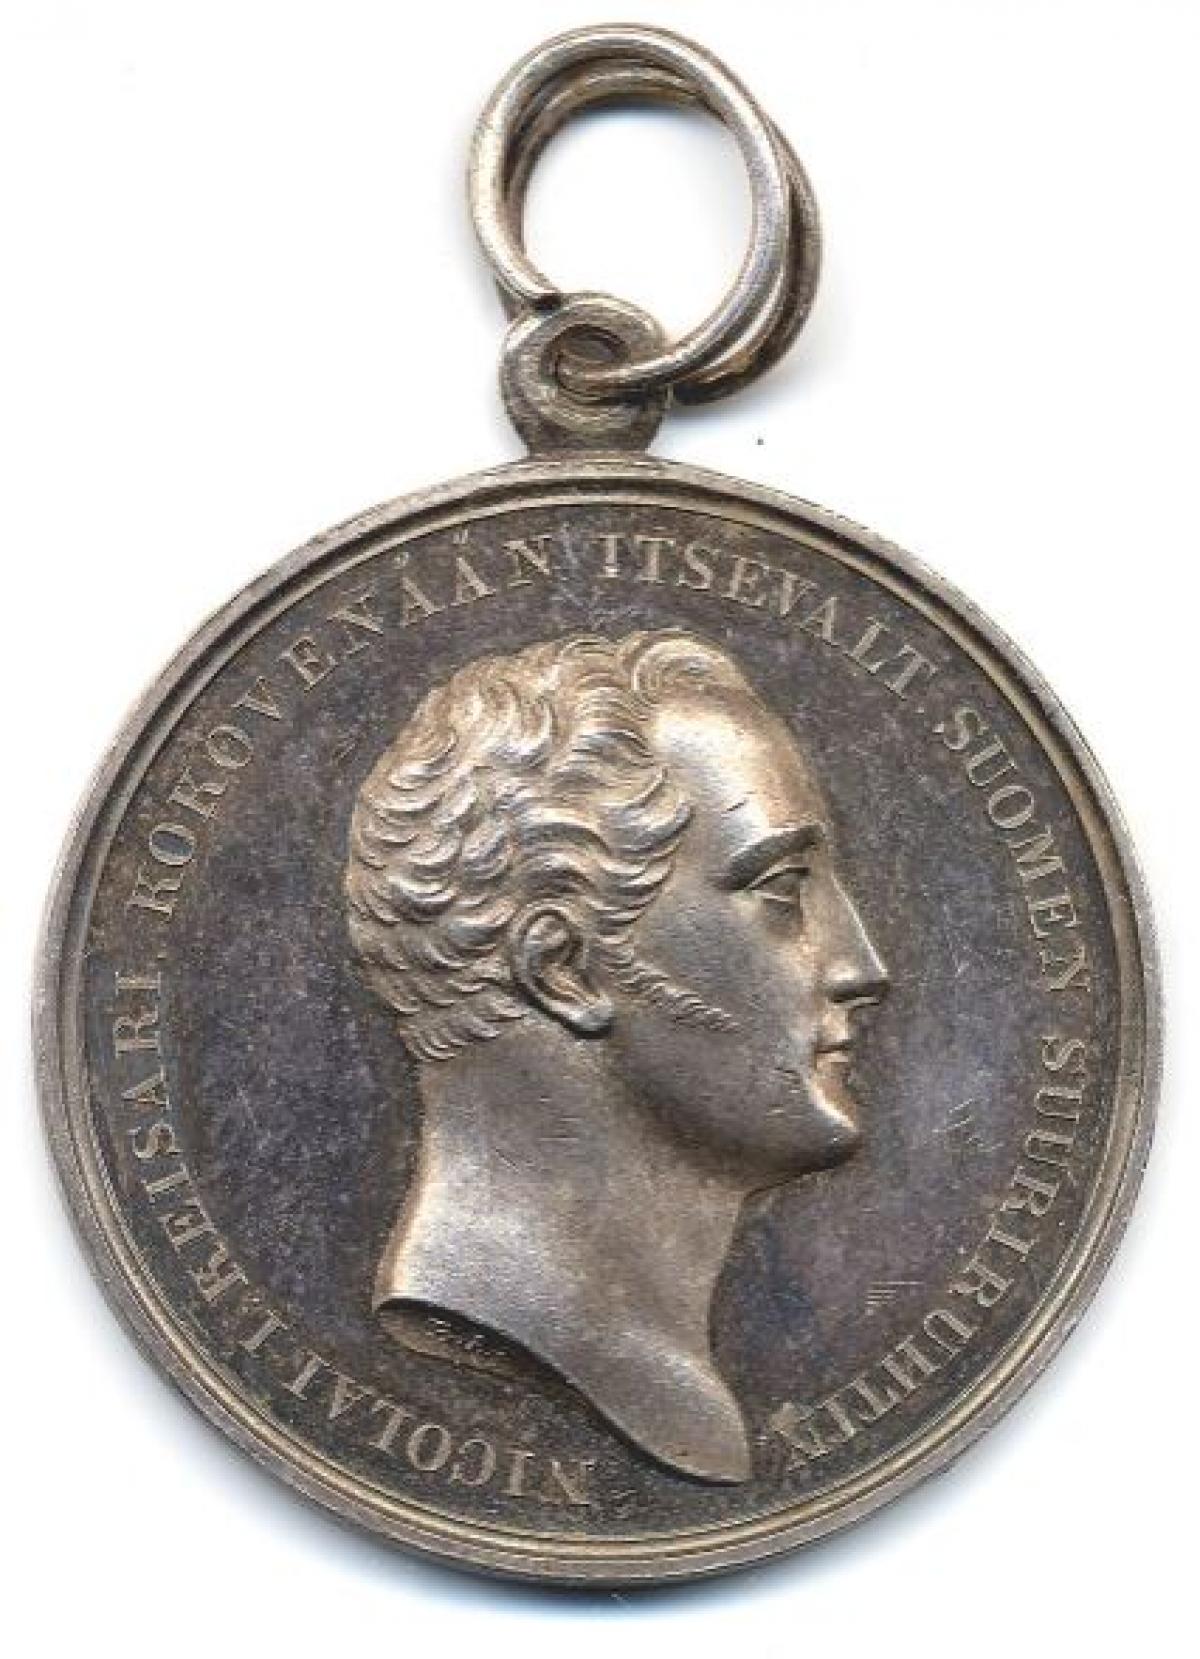 Medalj med kejsar i Nikolai I i sidoprofil